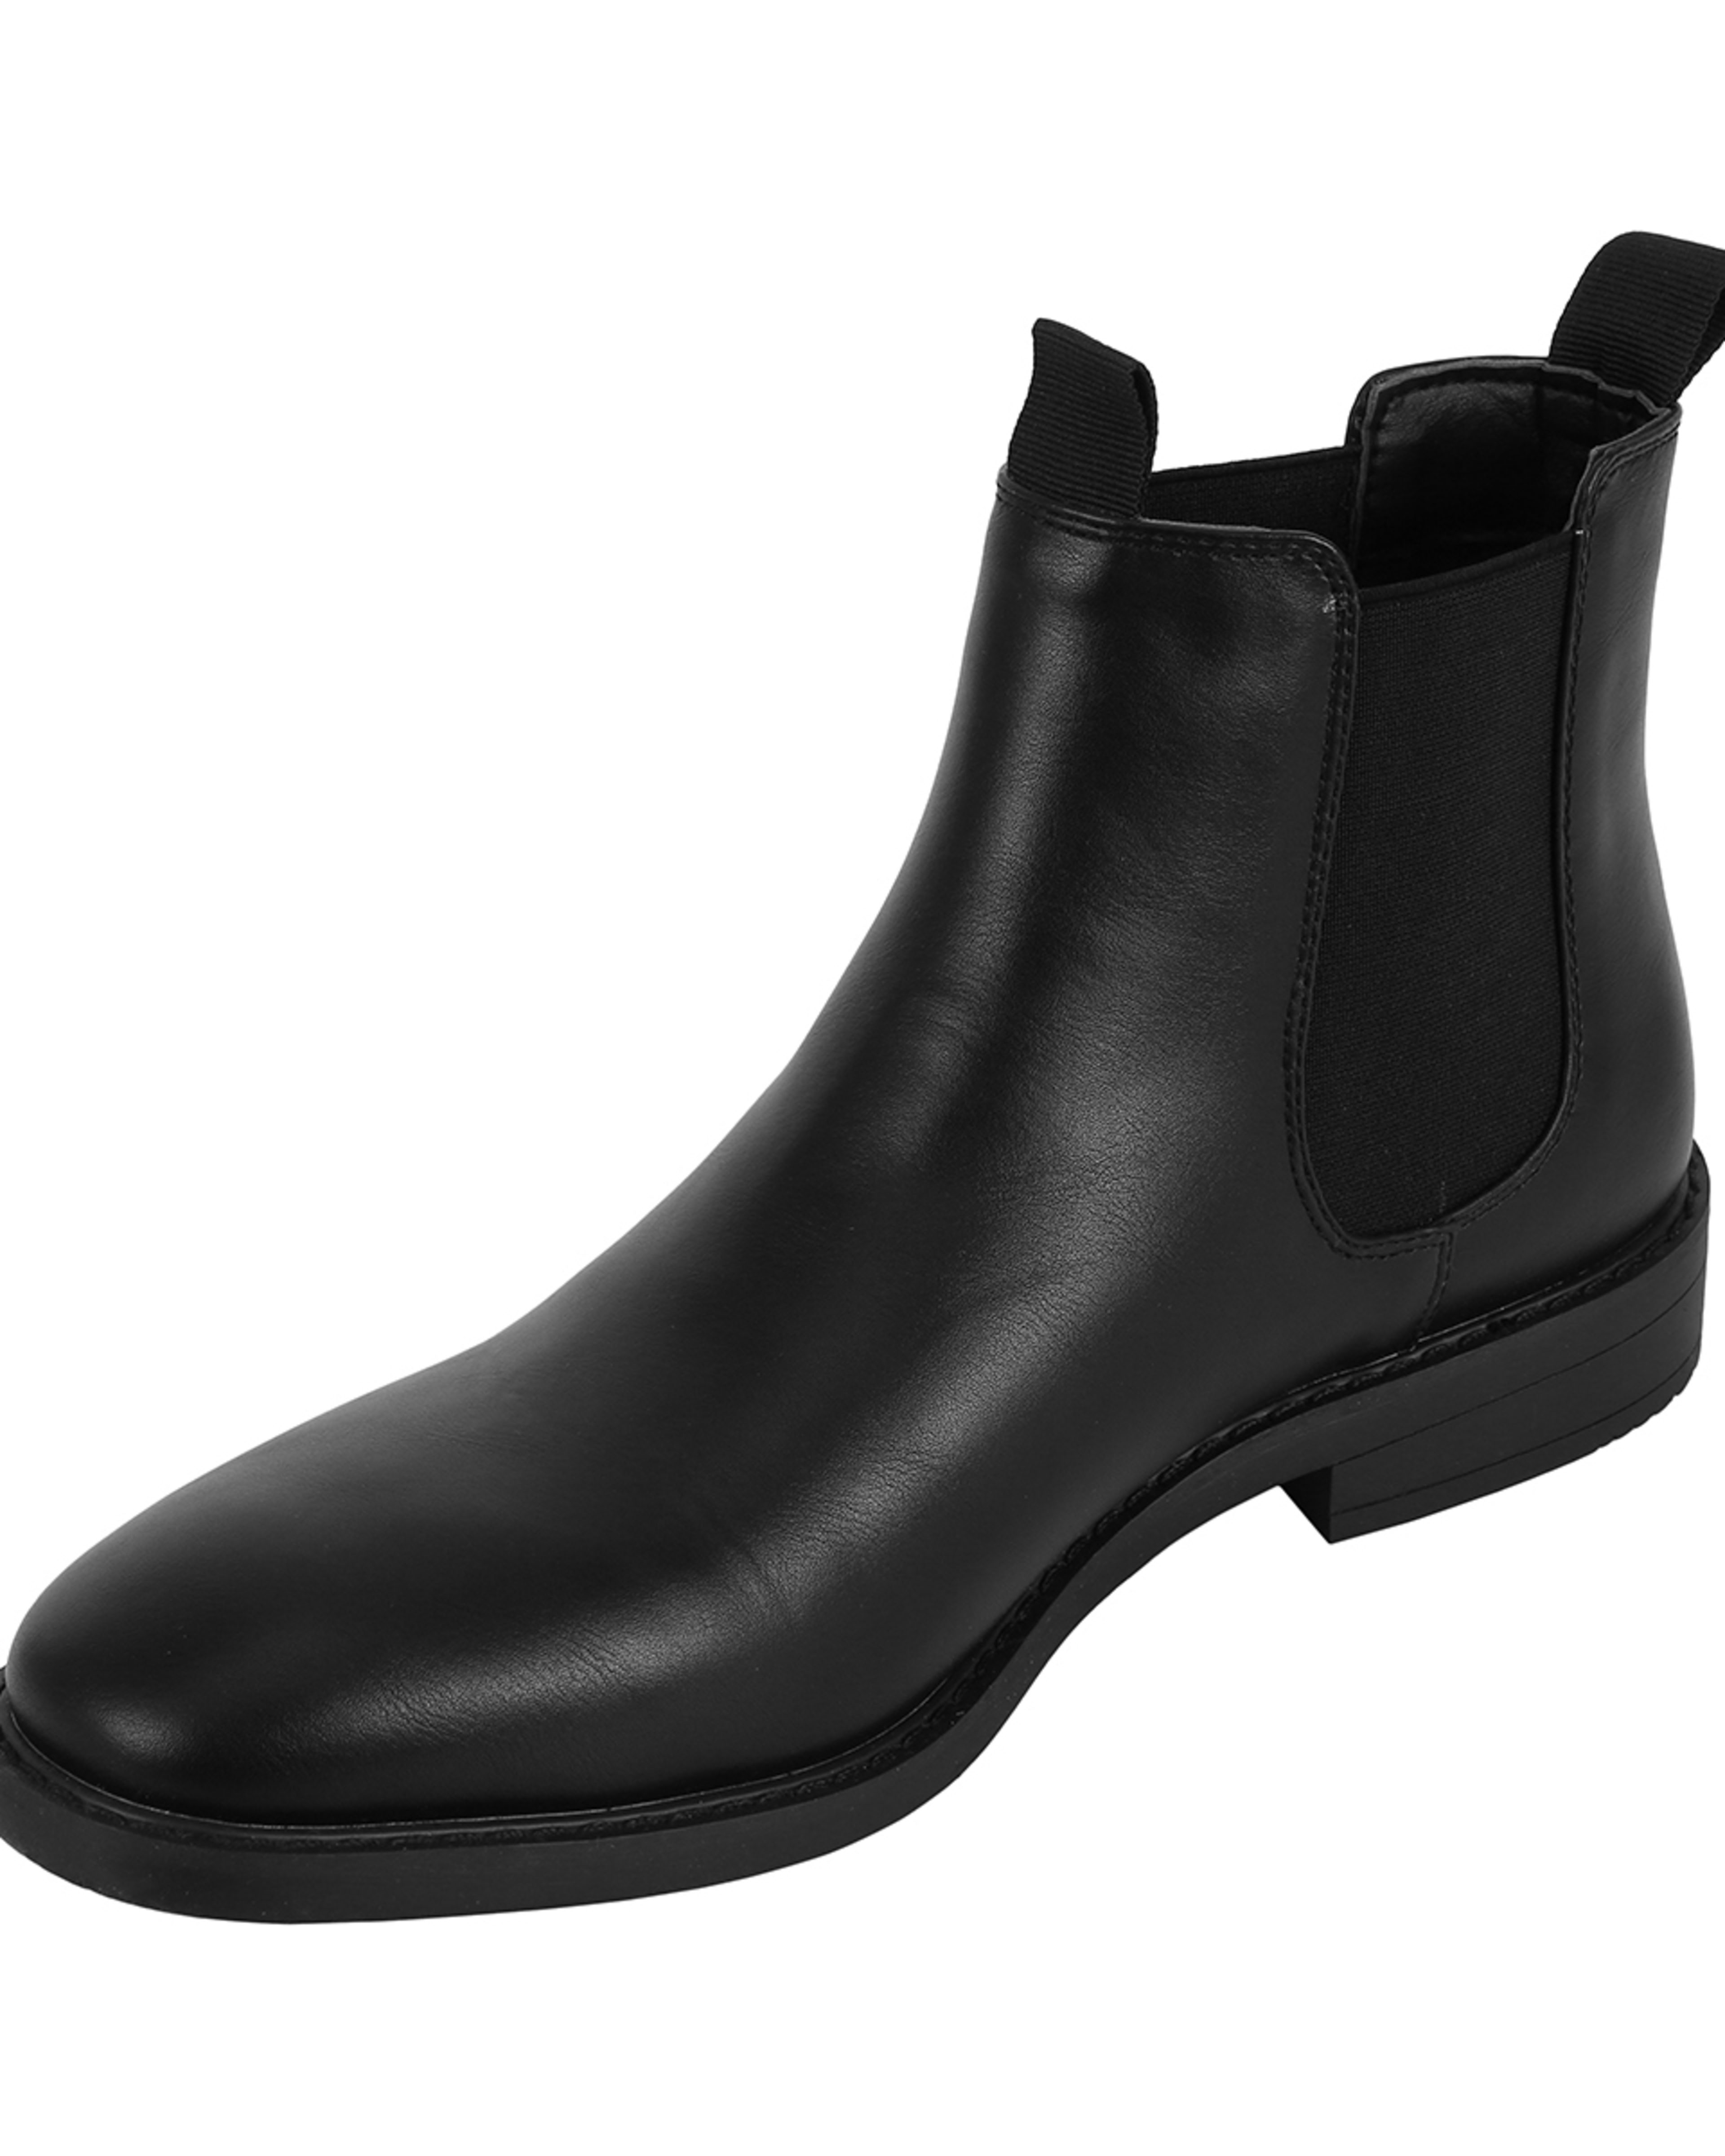 Slip On Gusset Boots - Kmart